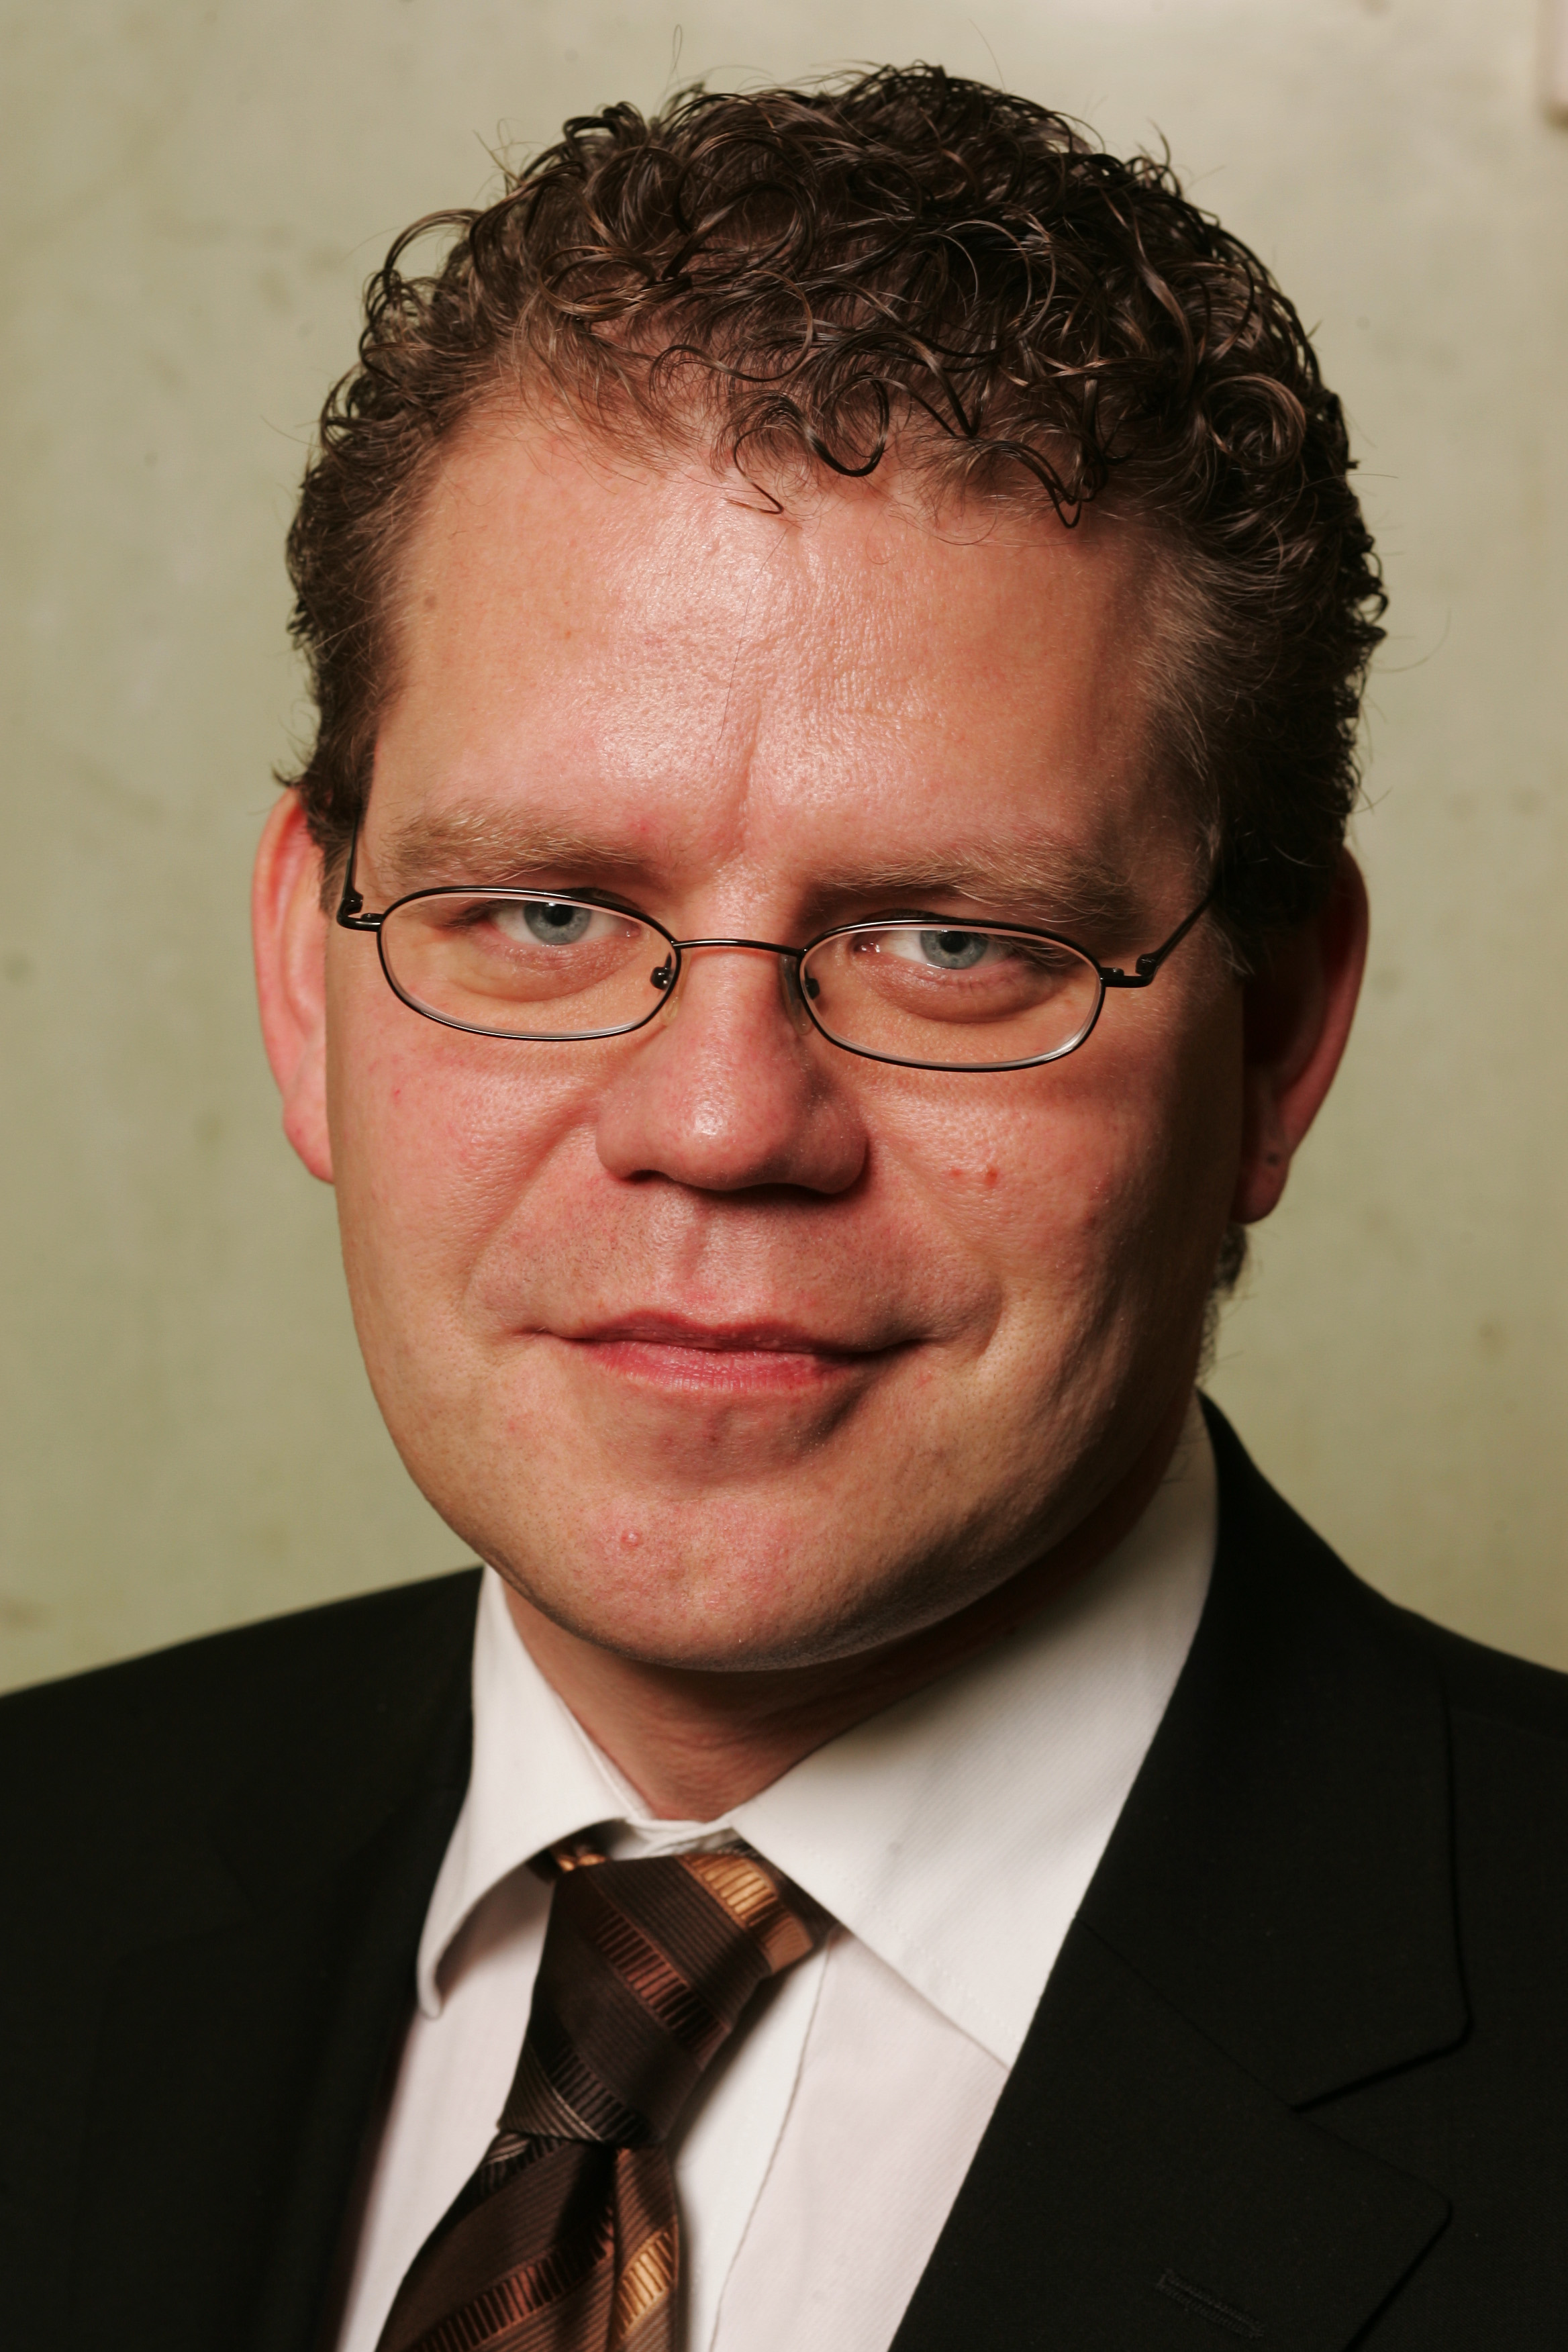 Islands socialminister, Arni Magnusson